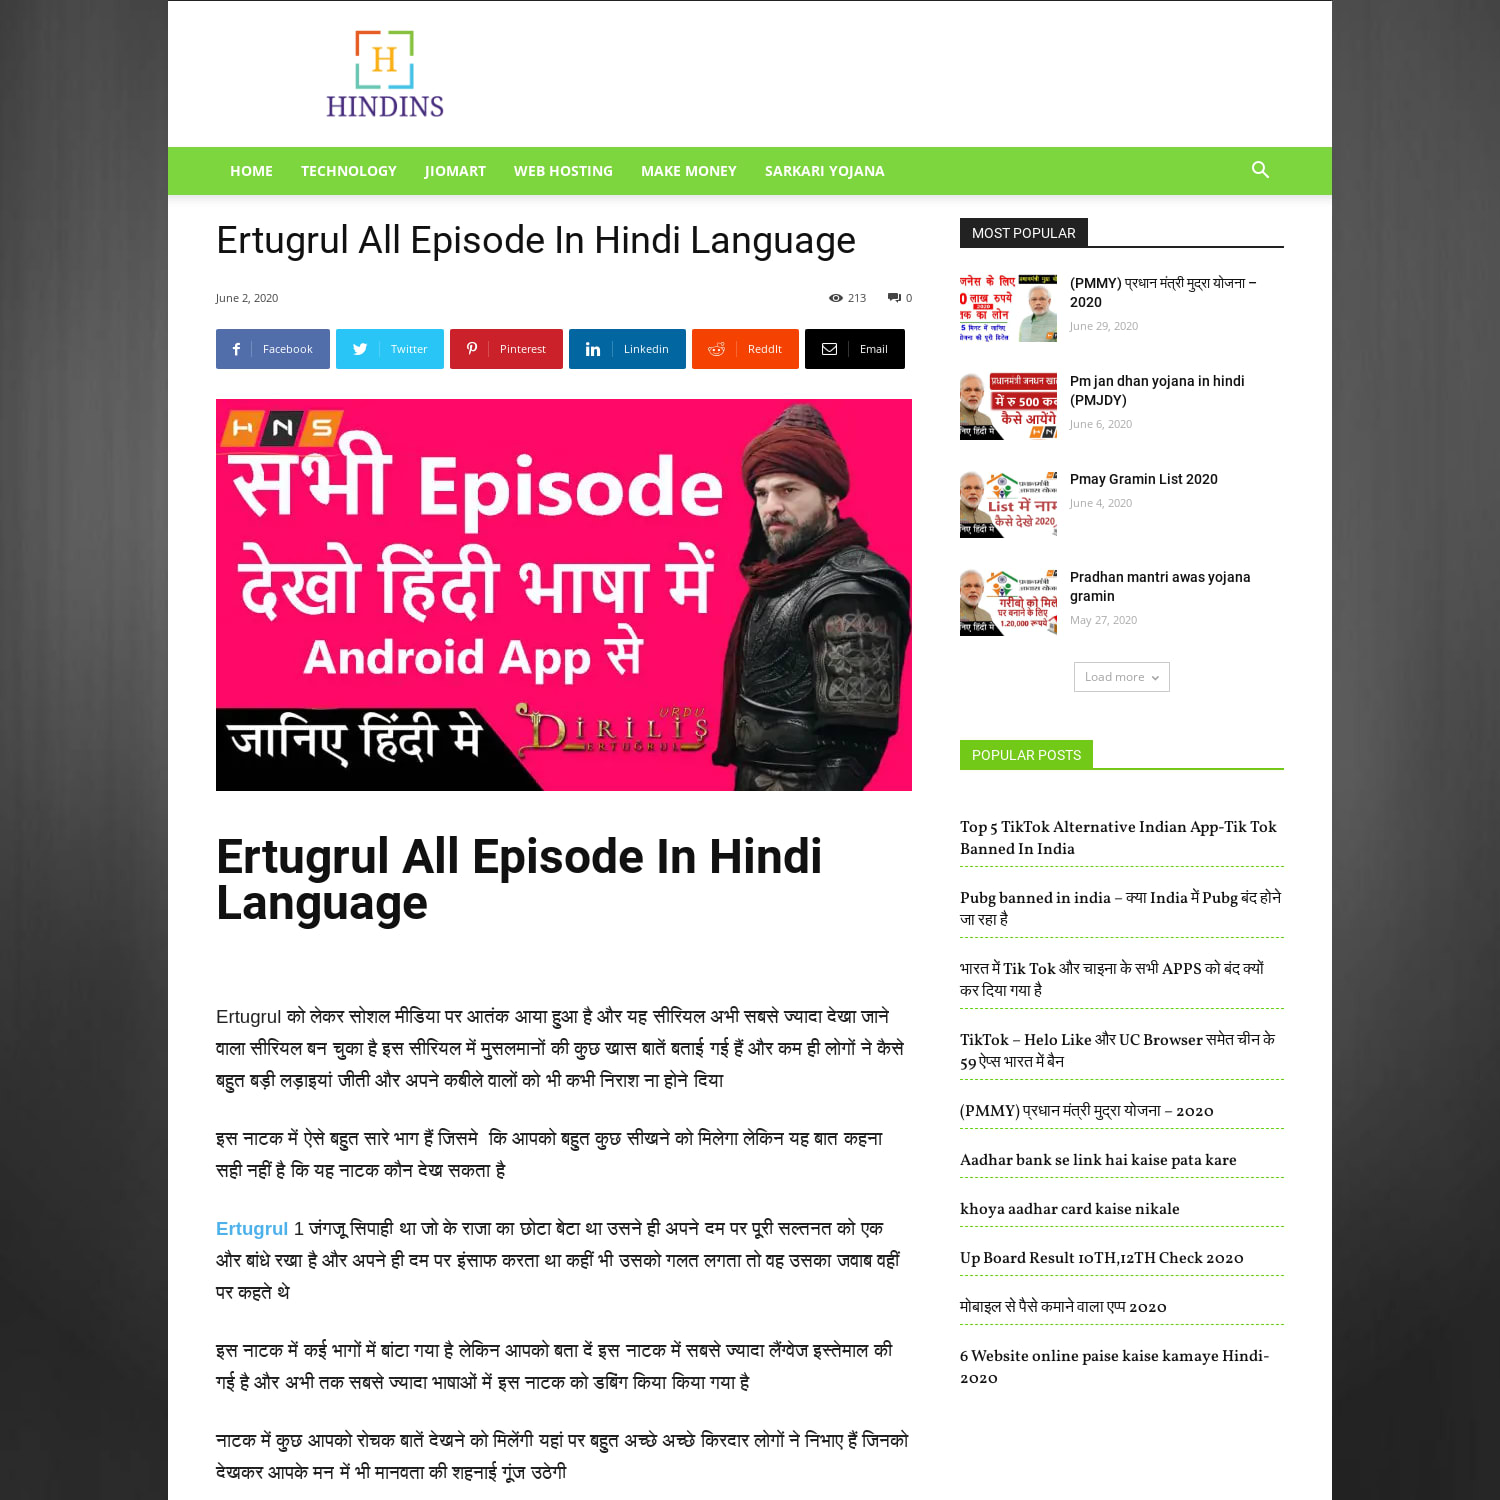 Ertugrul All Episode In Hindi Language